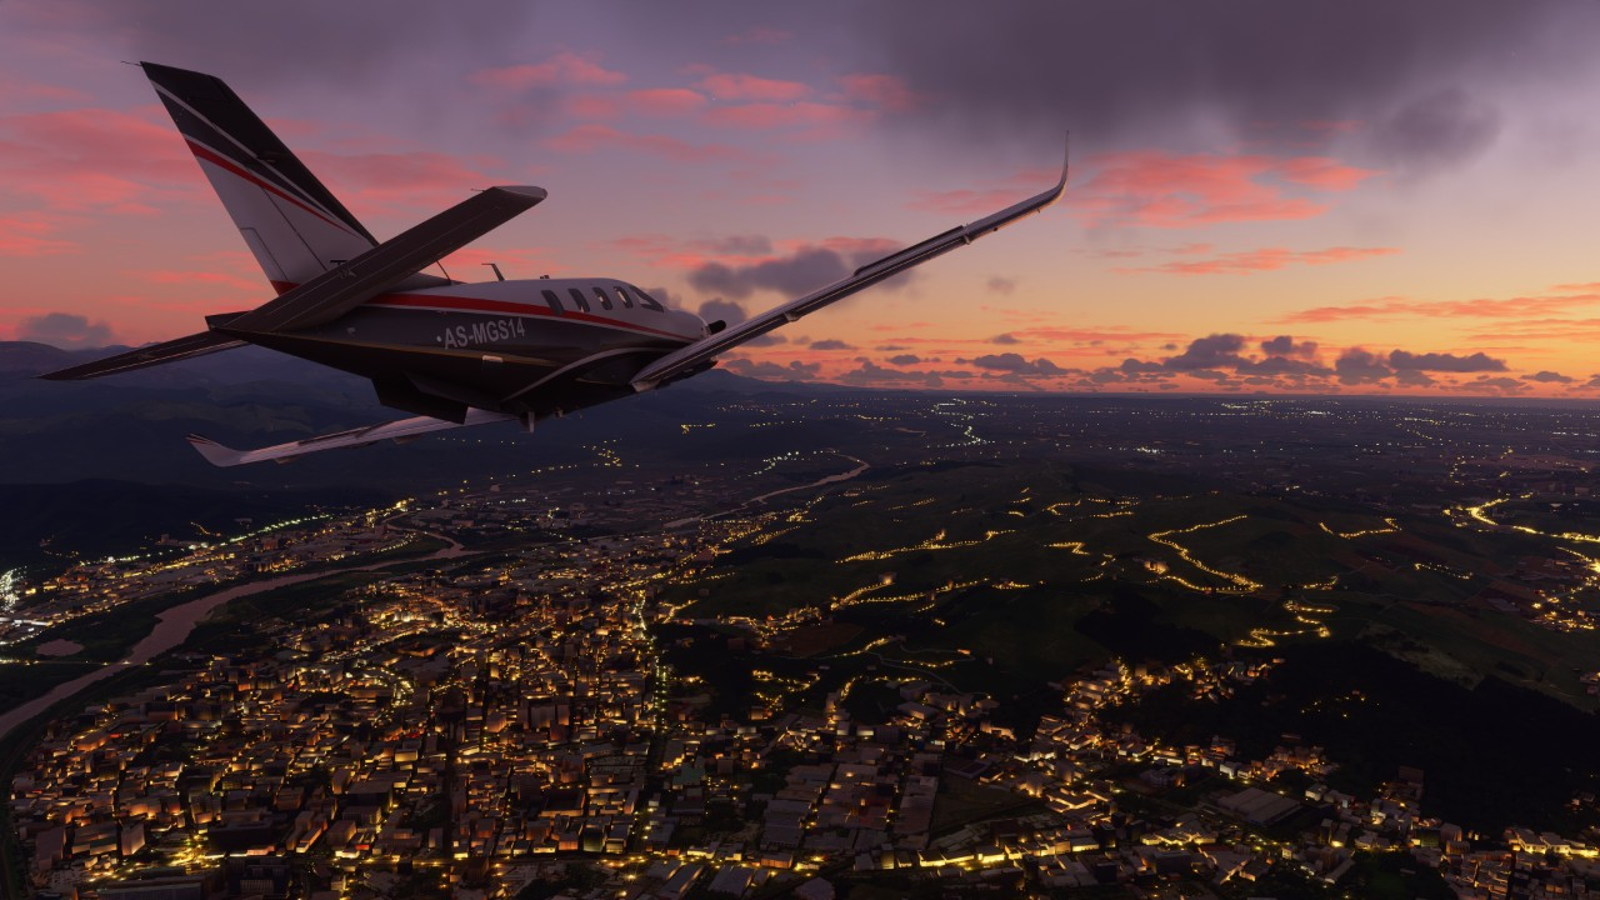 Microsoft Flight Simulator won't launch on Steam - The Tech Game